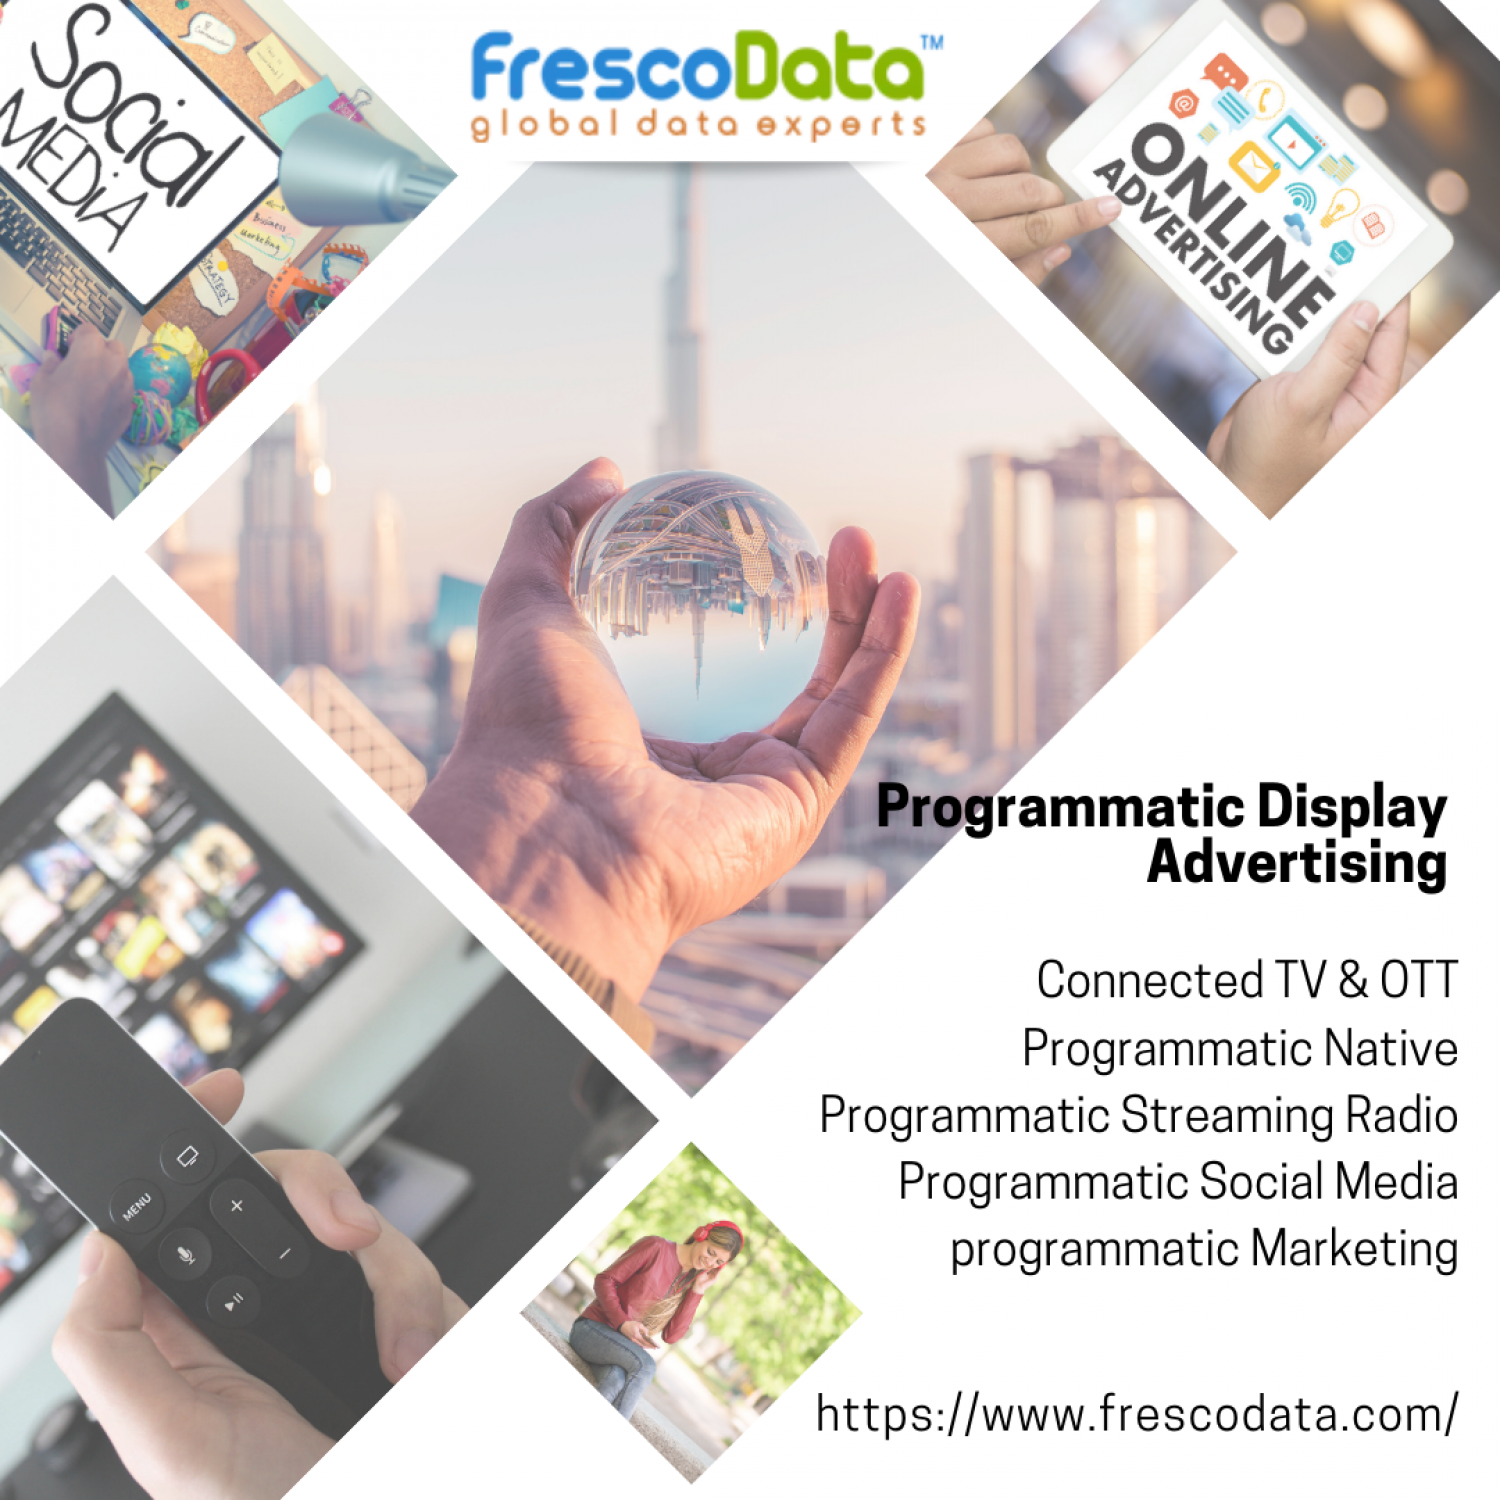 FrescoData Programmatic Display Ads Infographic